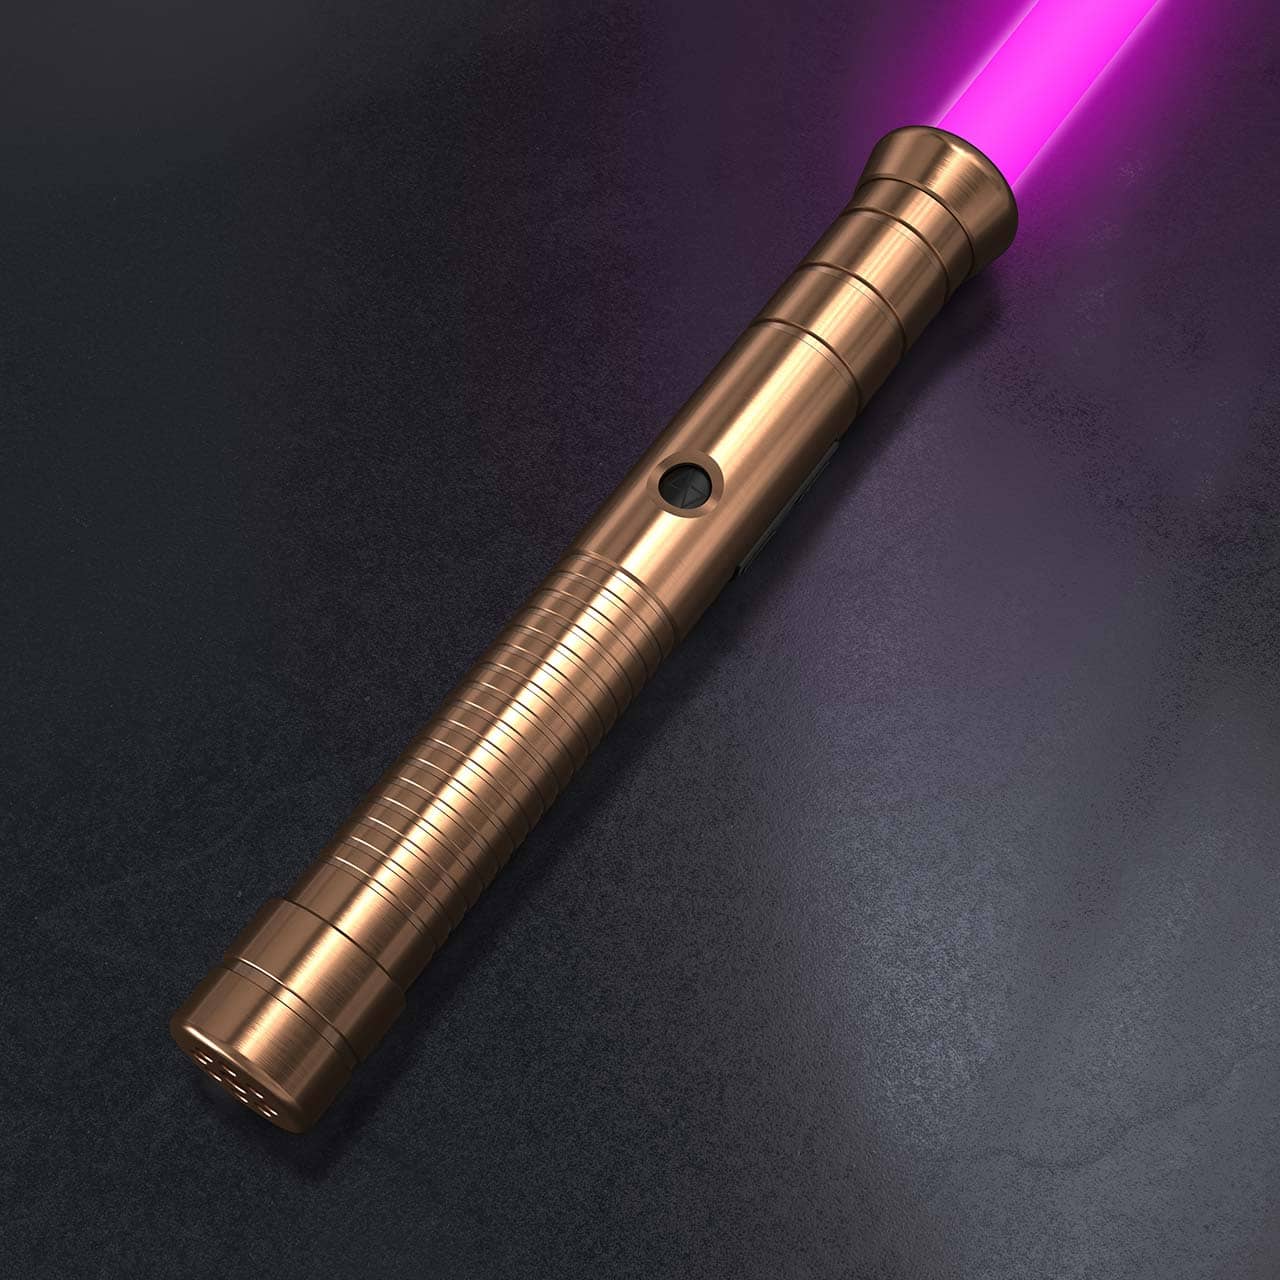 Solaari - Le sabre laser connecté ultraréaliste Made in France